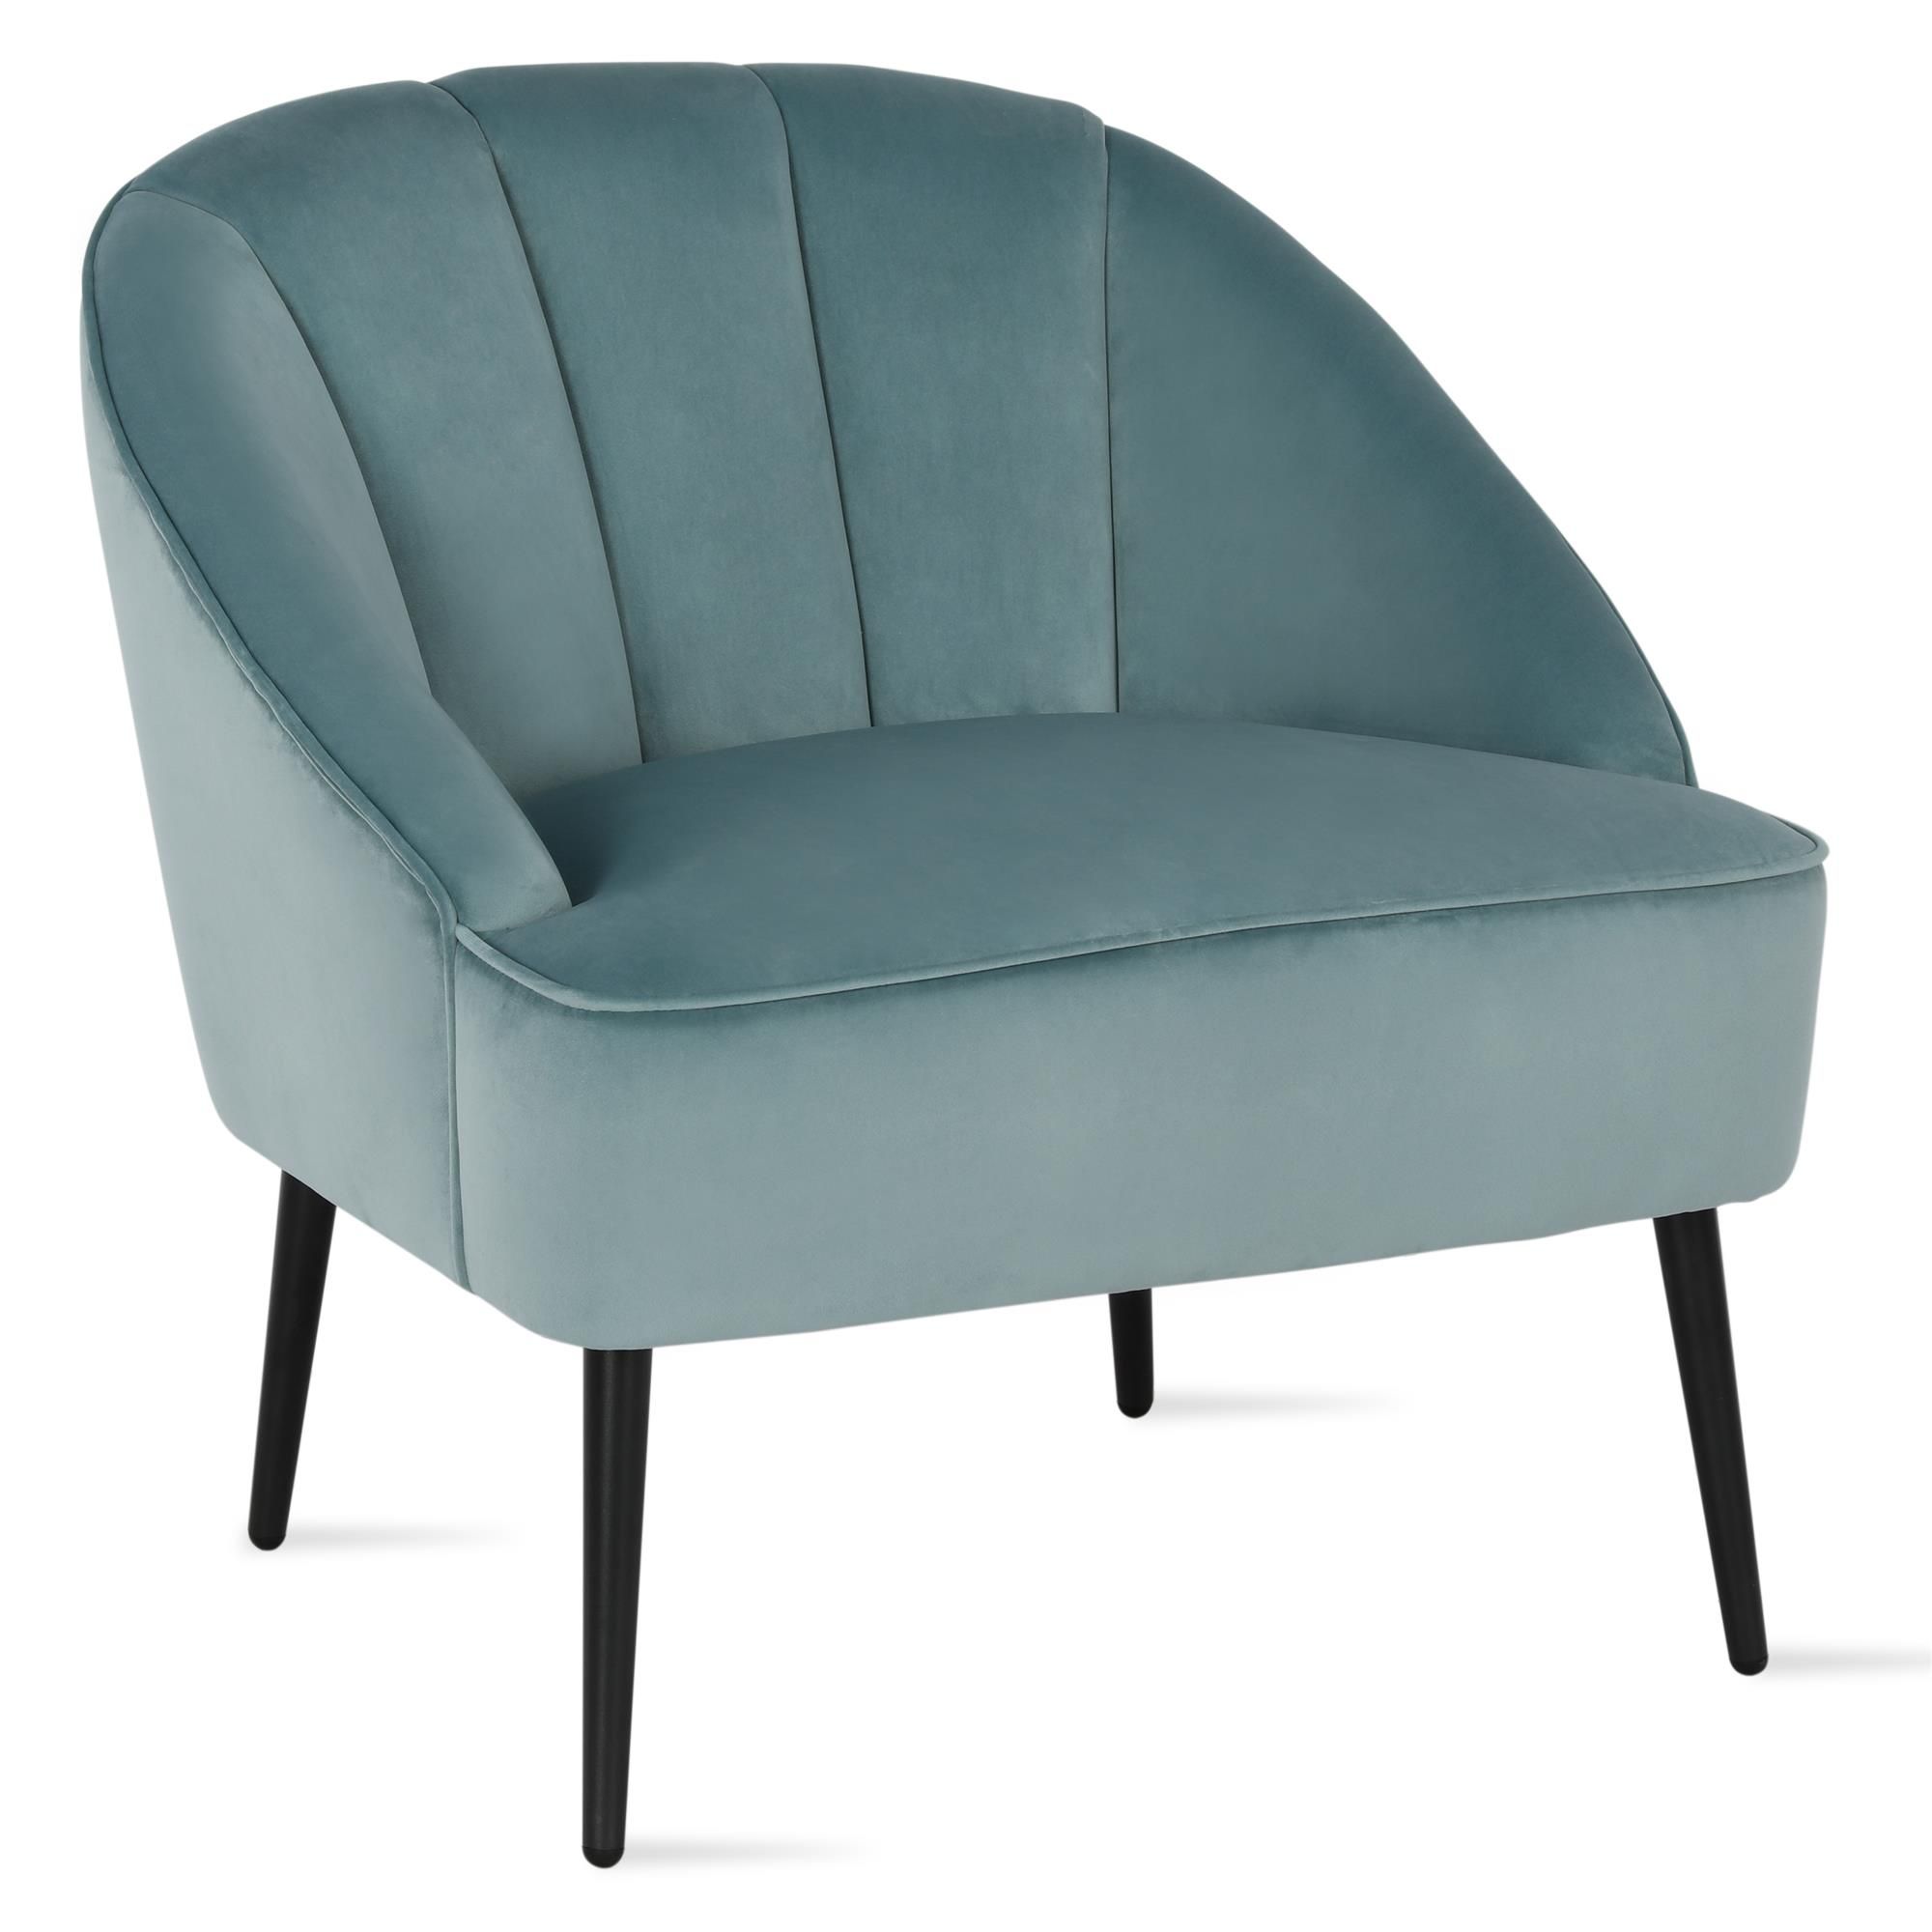 Blue Accent Chair 